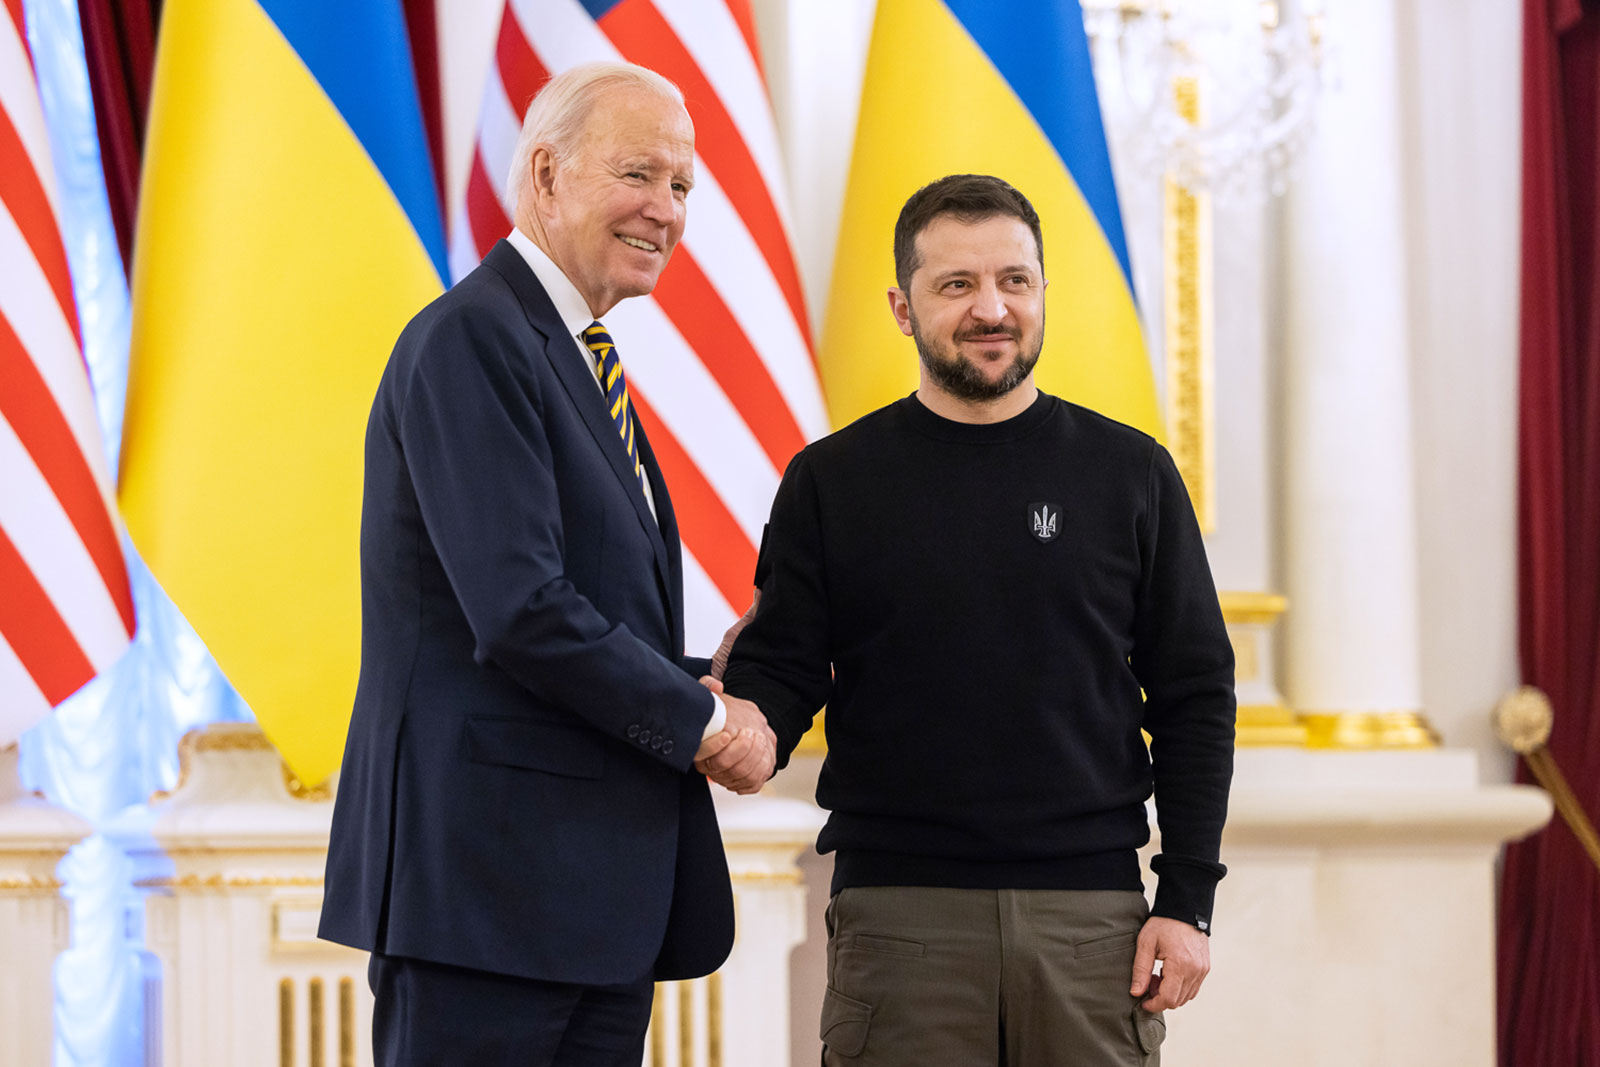 US President Joe Biden meets with Ukrainian President Volodymyr Zelensky at the Ukrainian presidential palace in Kyiv, Ukraine, on February 20. 